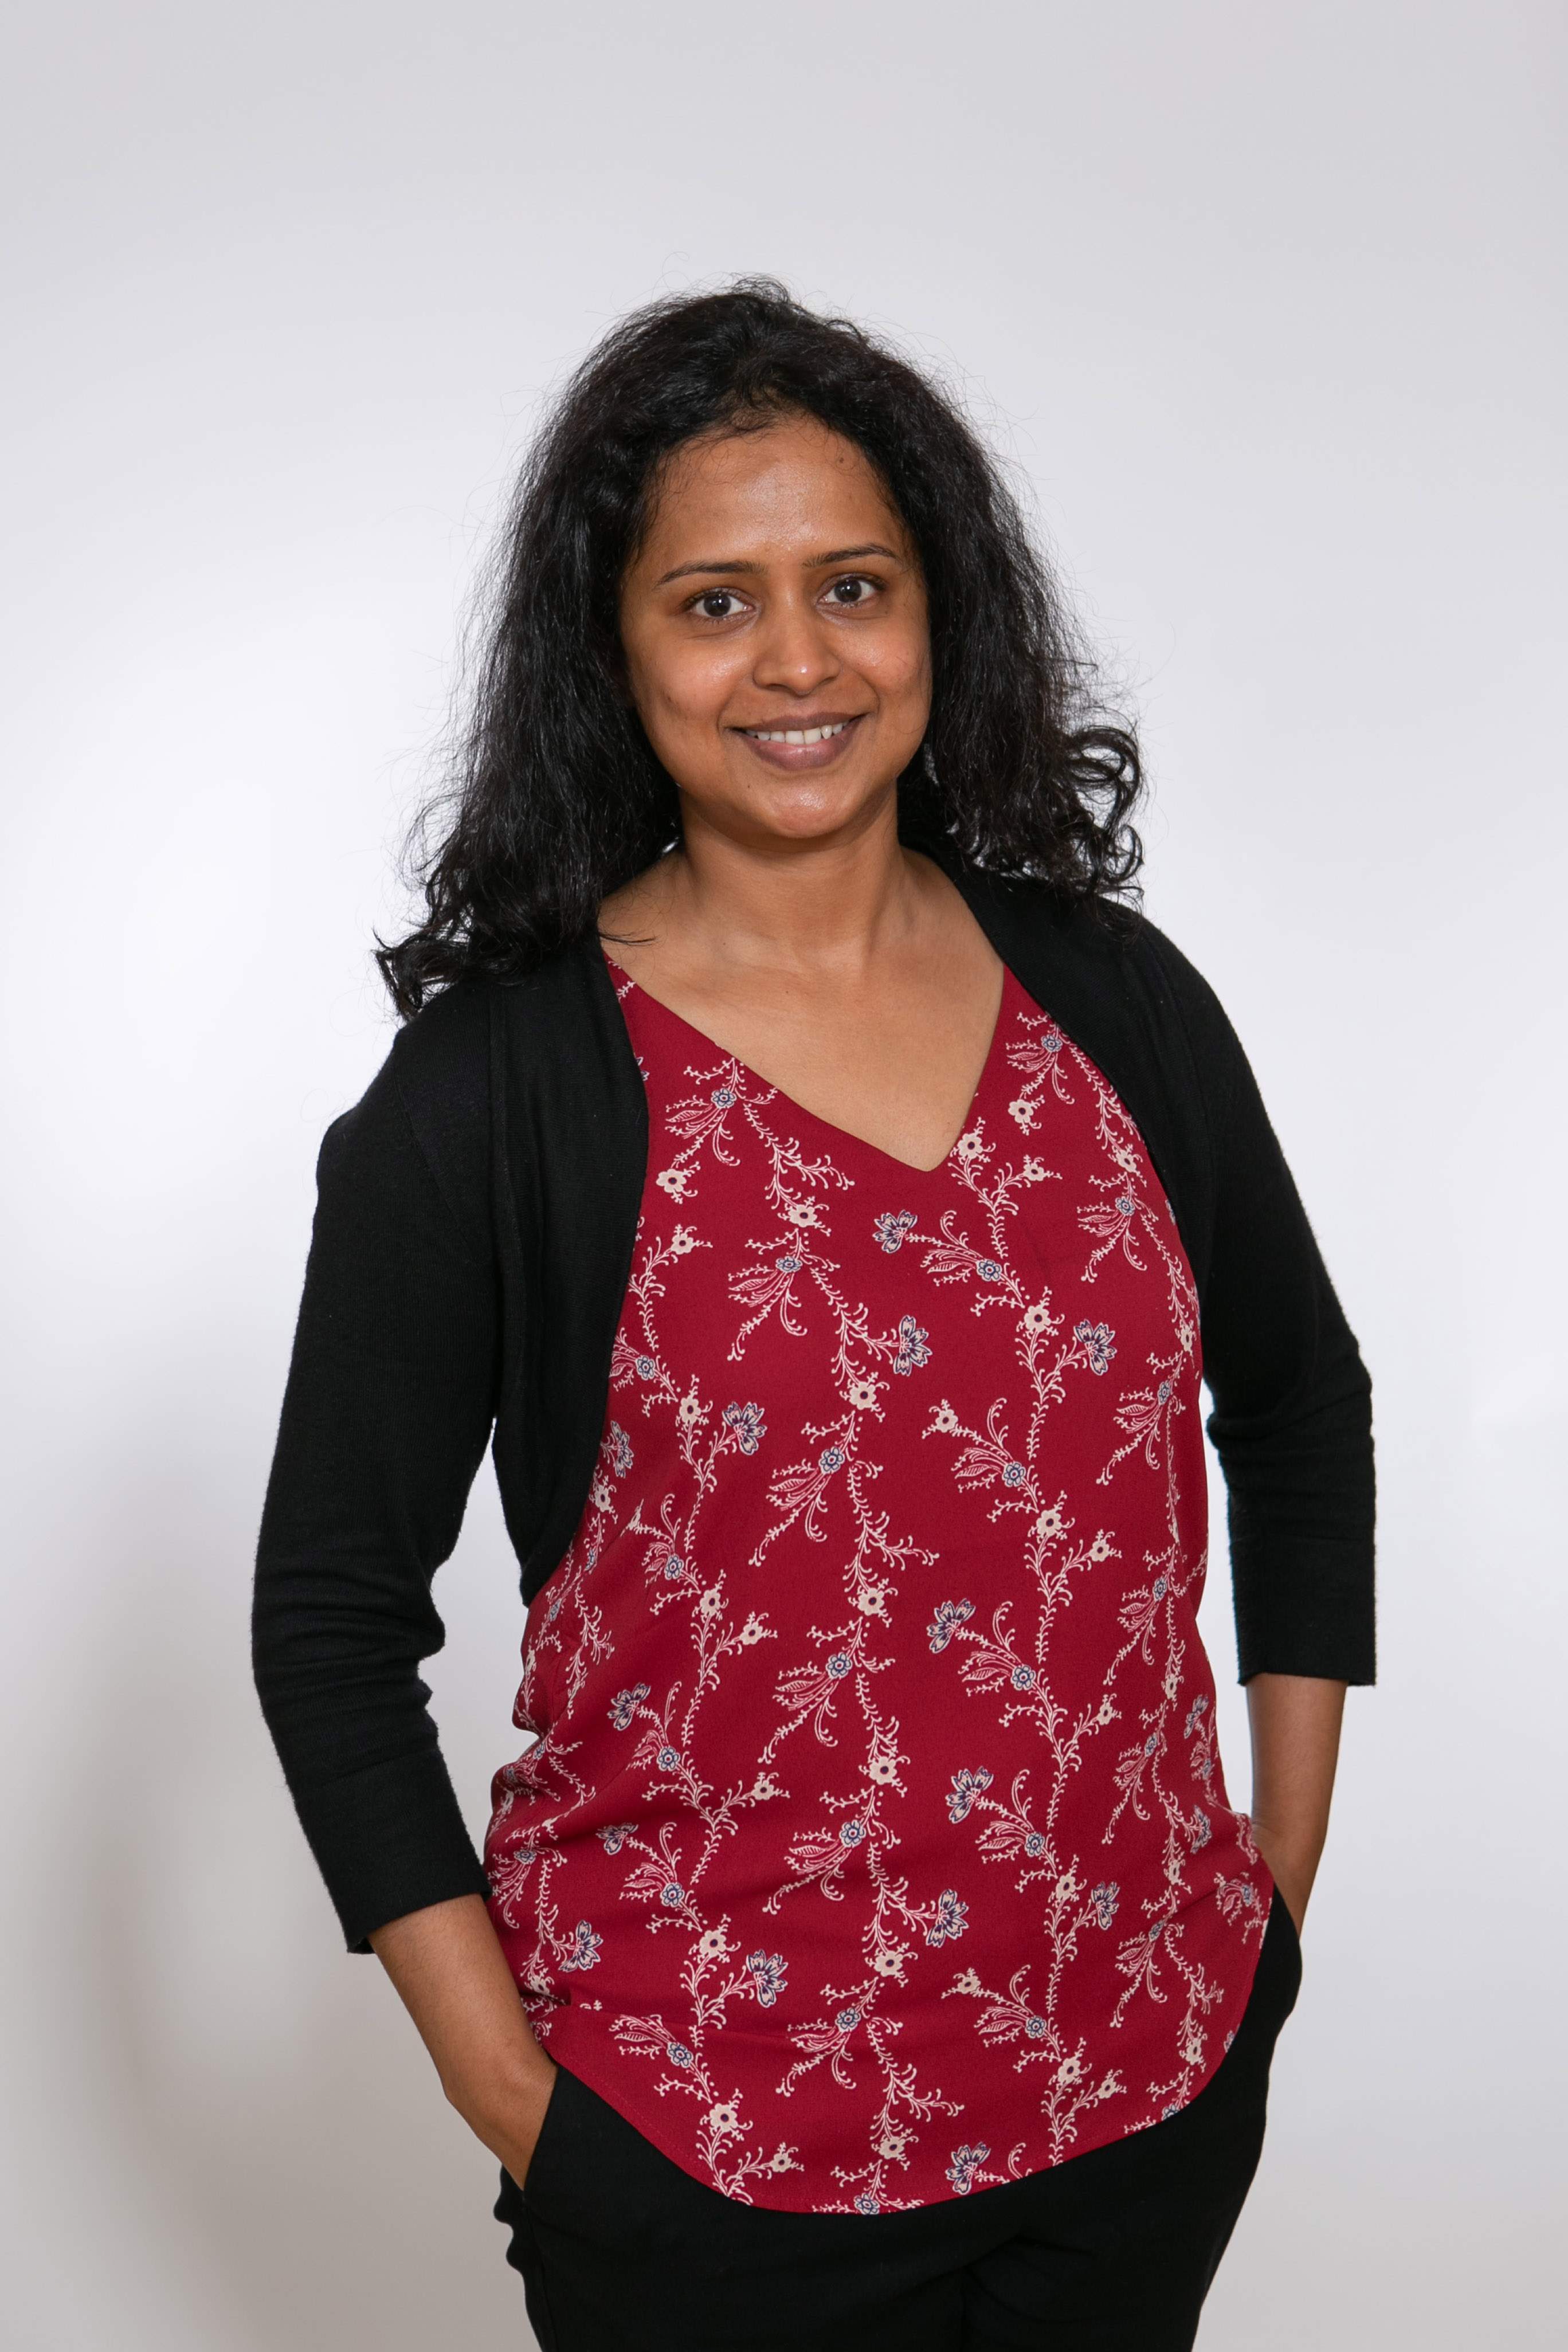 Neuorimmunology Research Coordinator, Mugdha Deshpande